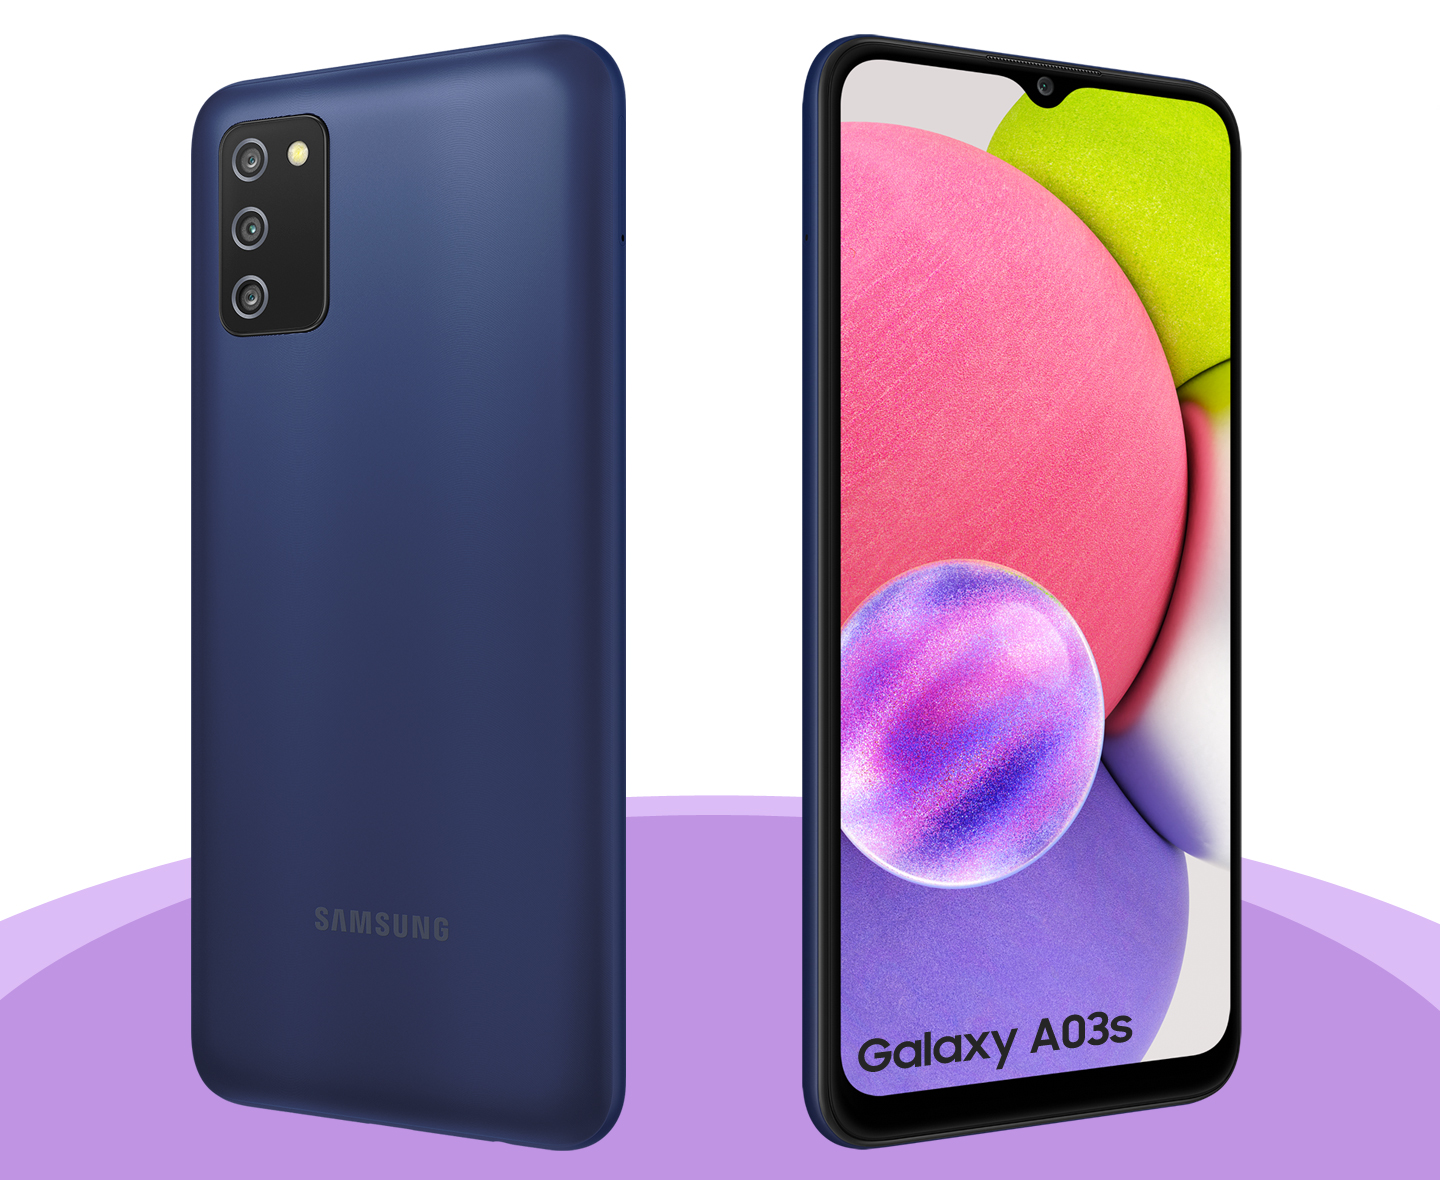 Samsung galaxy a03s